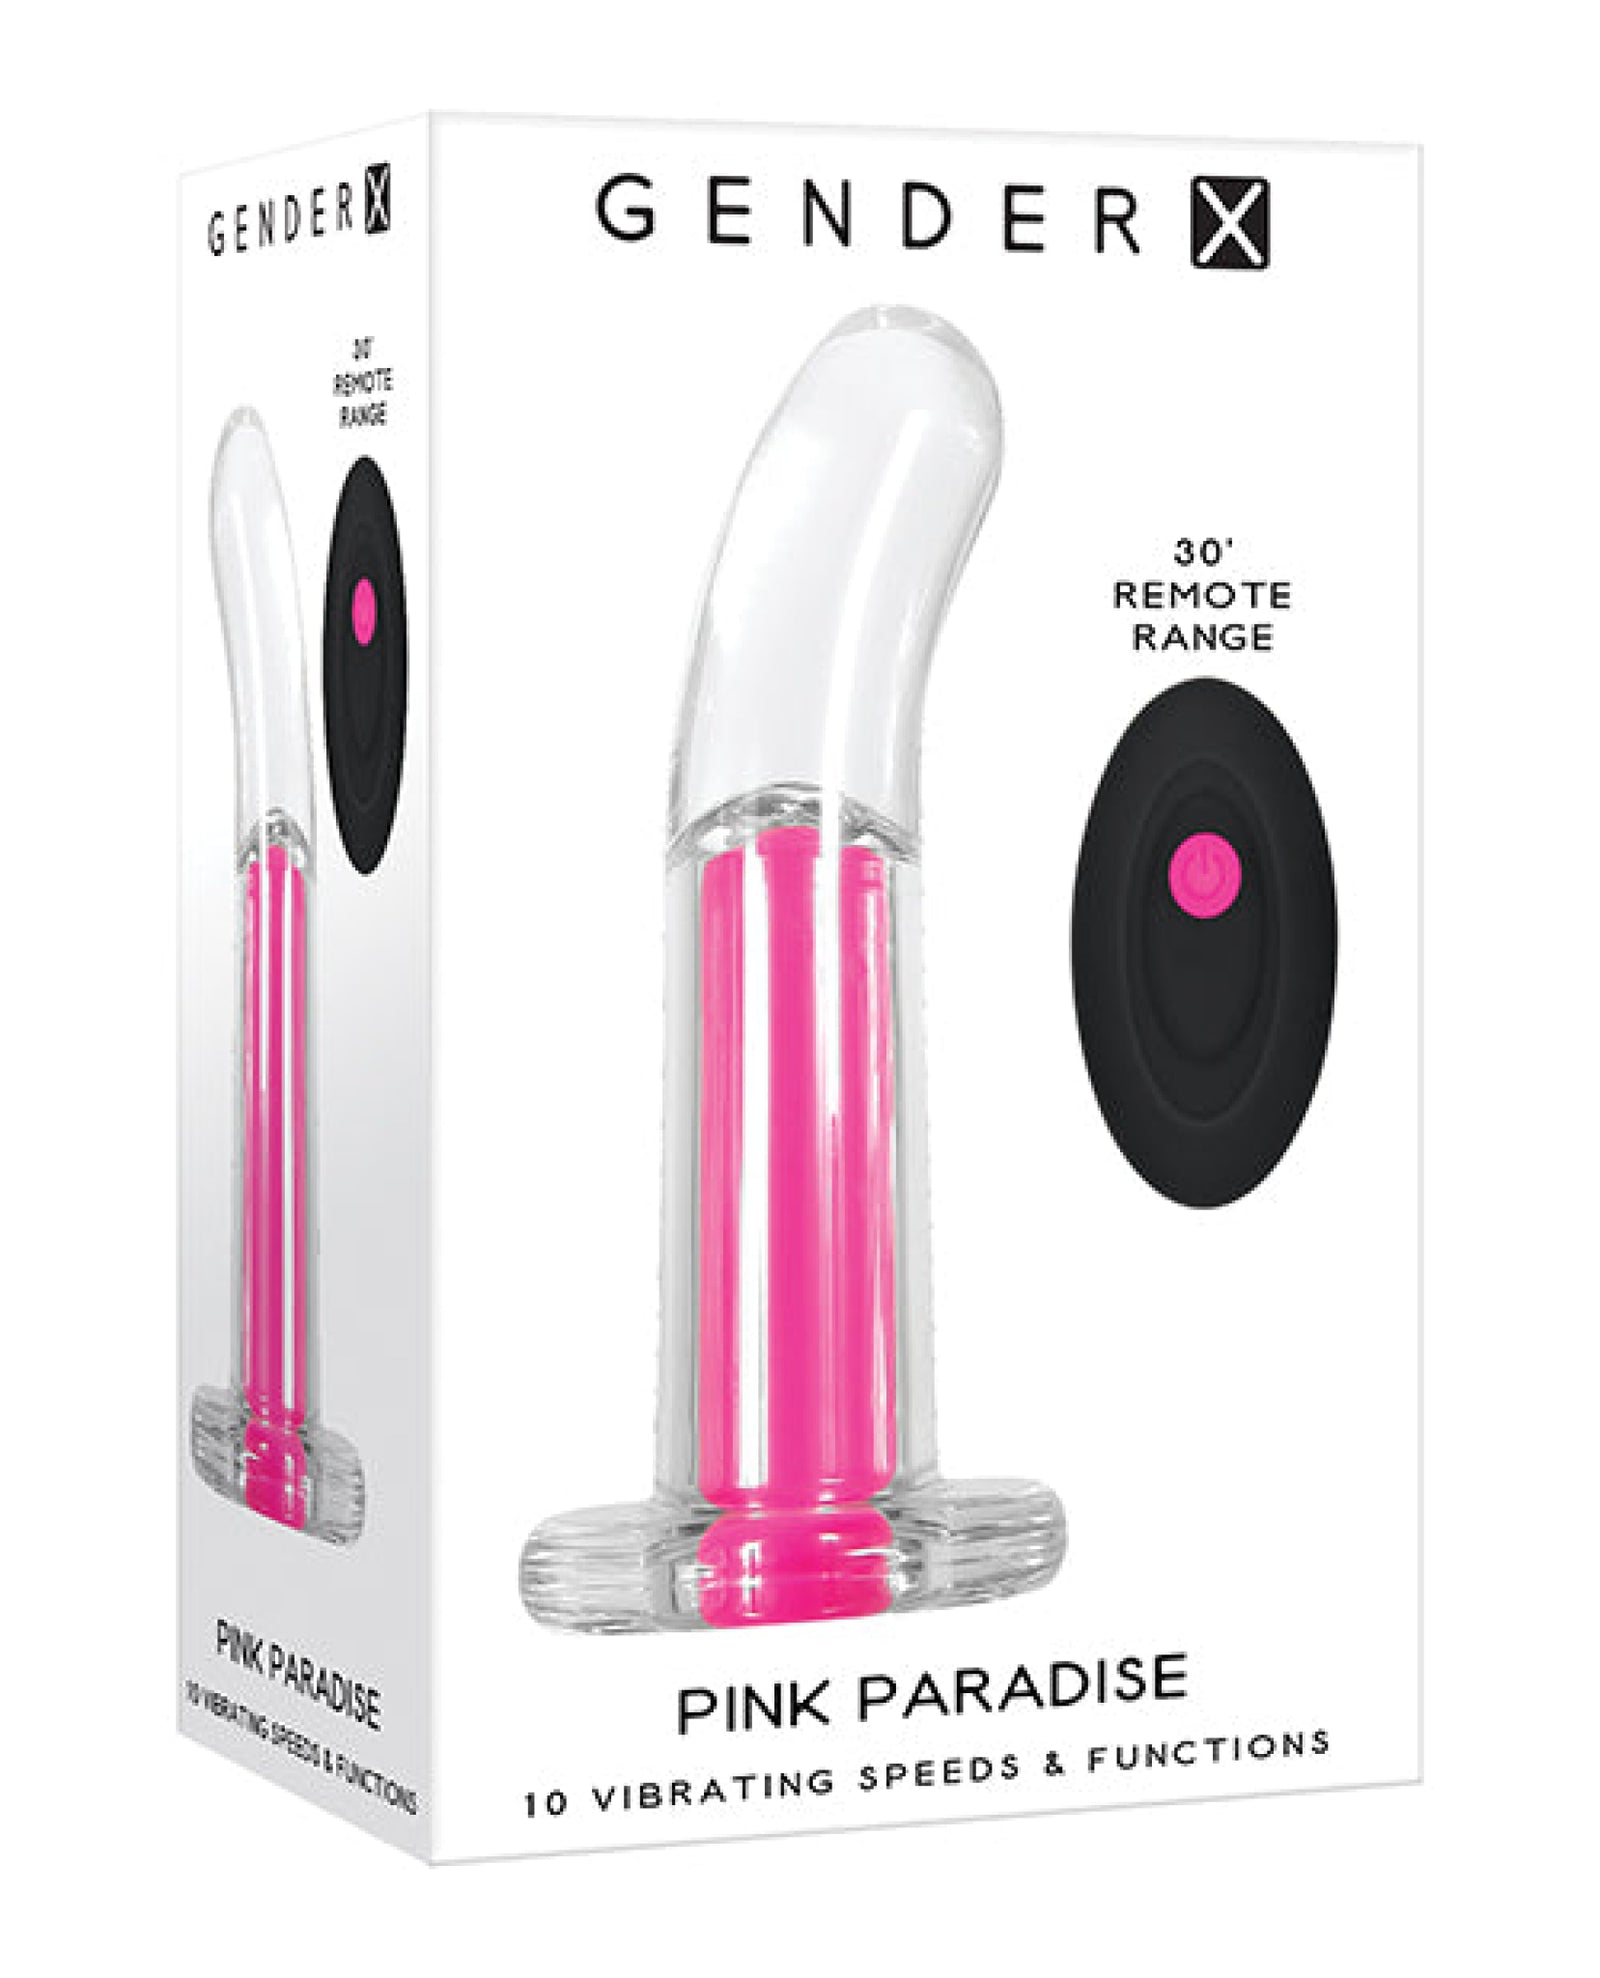 Gender X Pink Paradise - Clear-pink Gender X